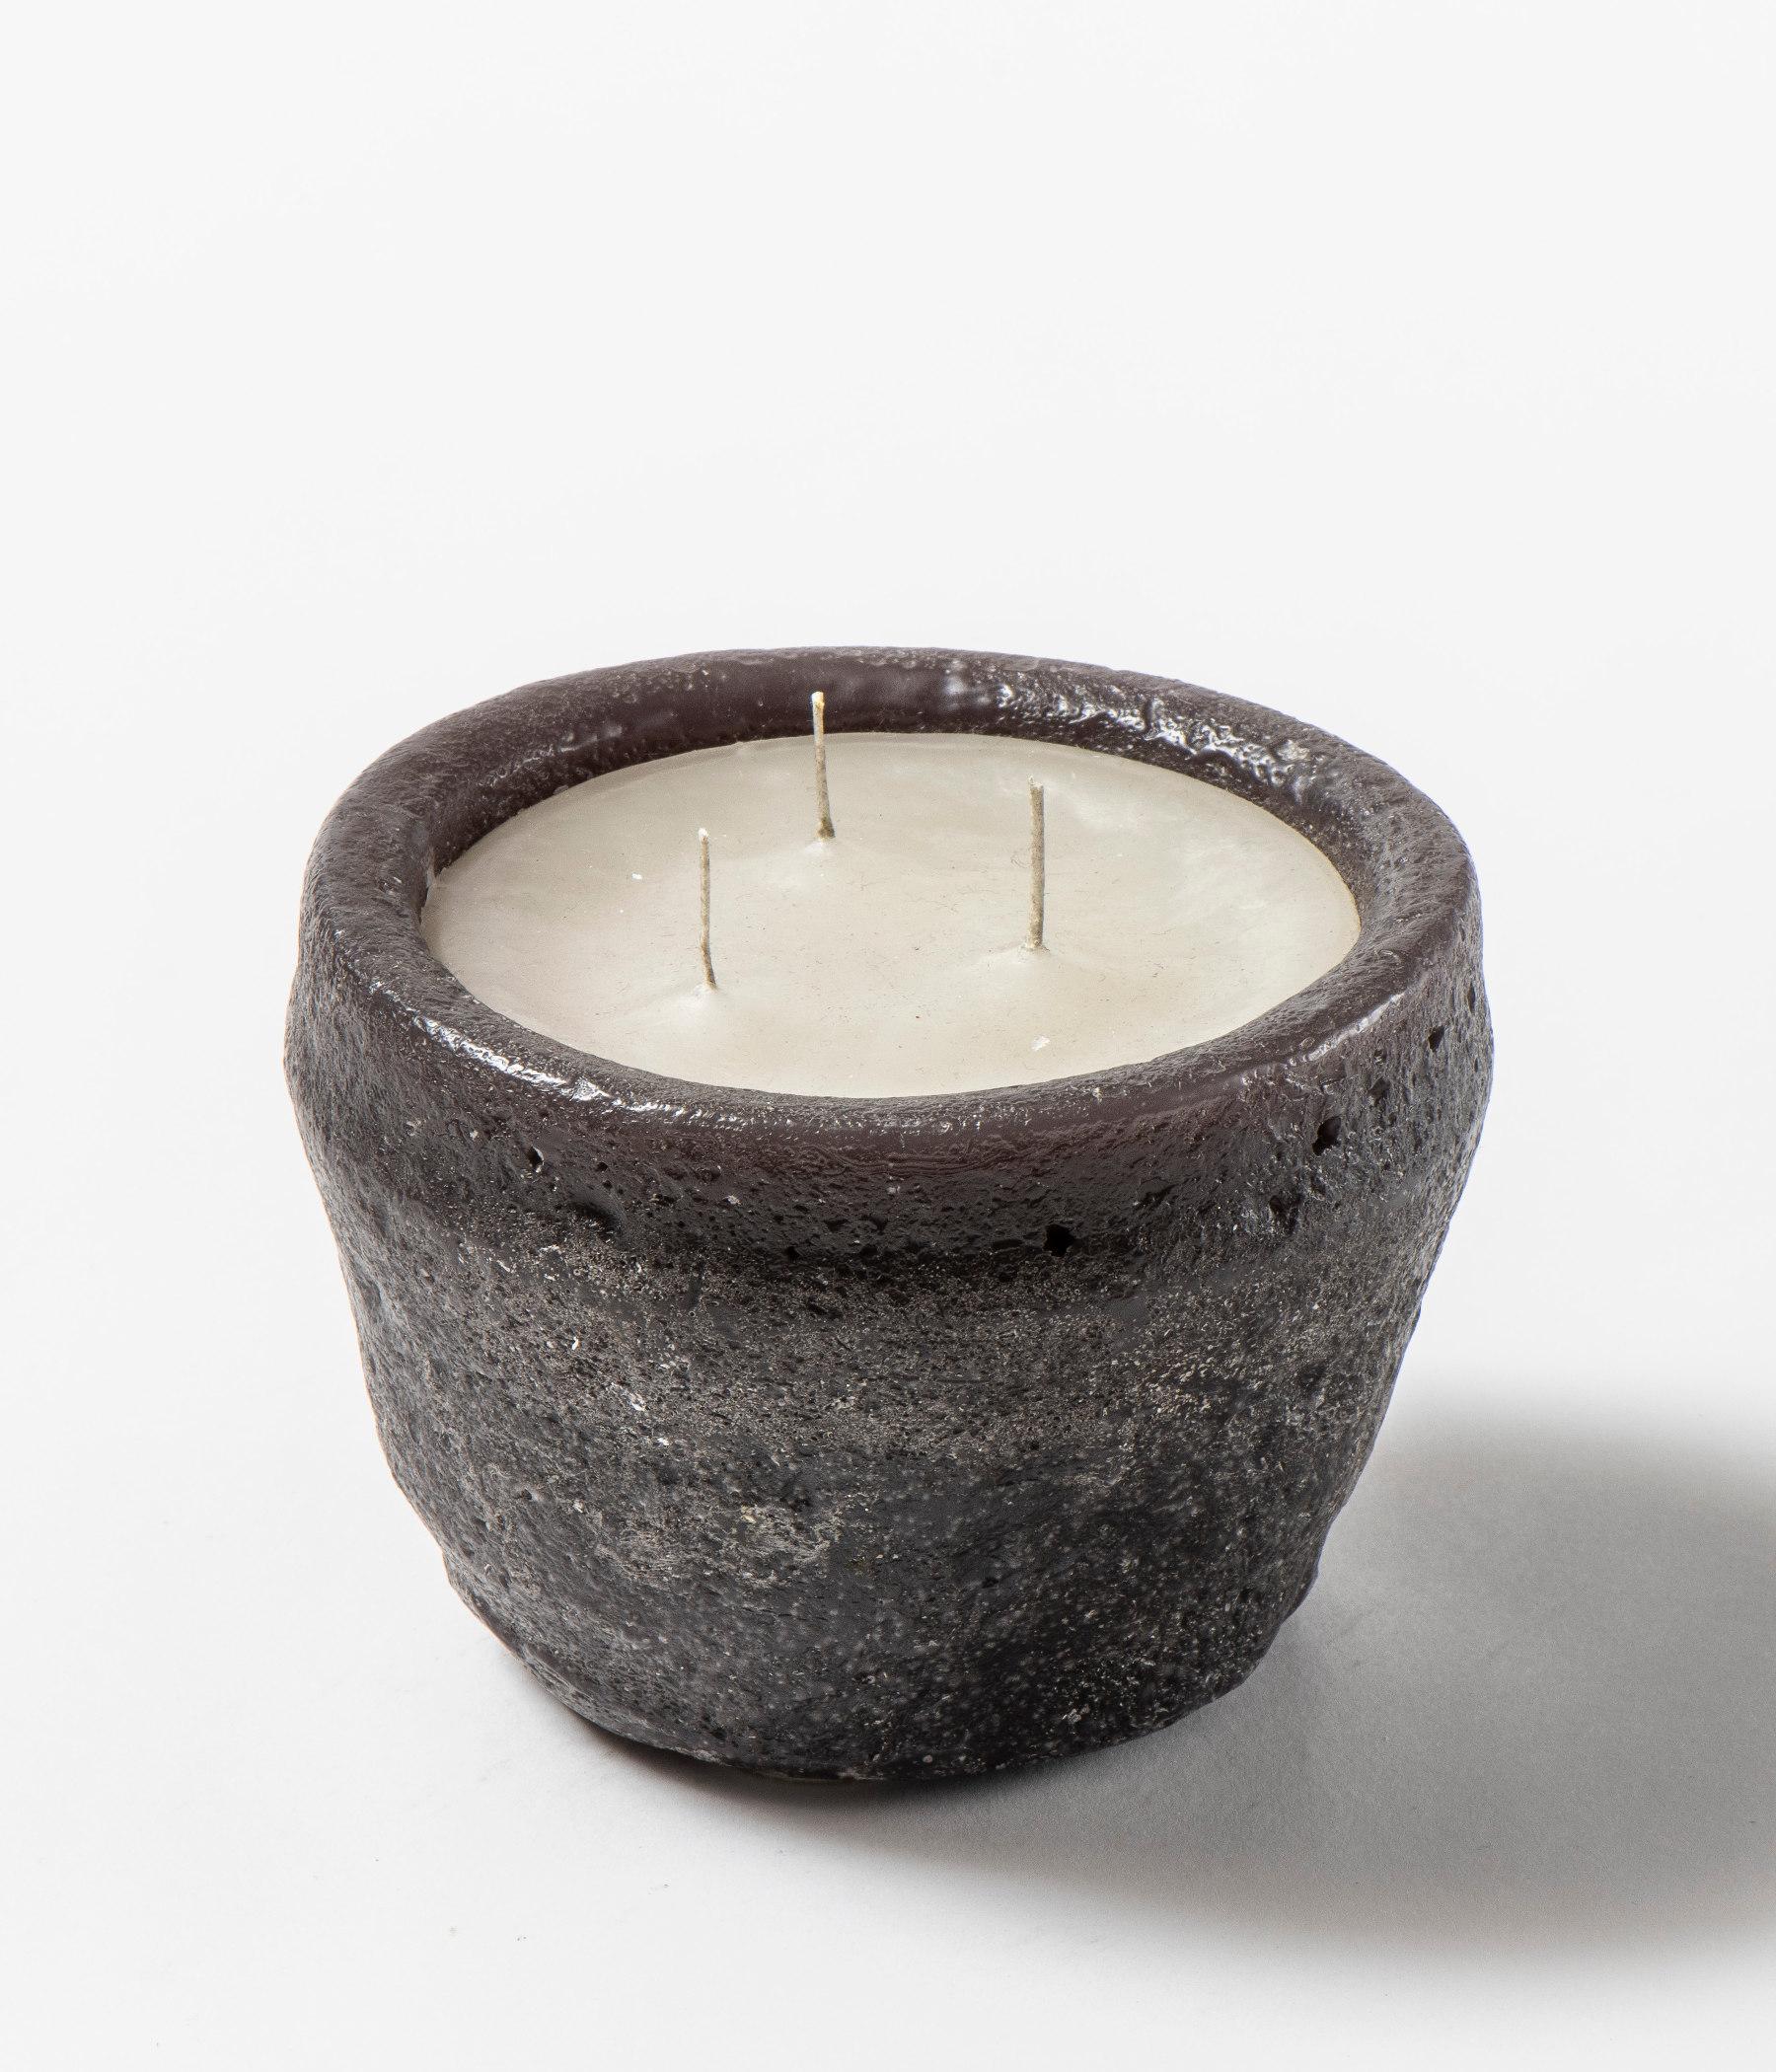 Rayher candela rotonda, color crema, altezza 25 cm, diametro 8 cm, 100%  paraffina, per battesimo